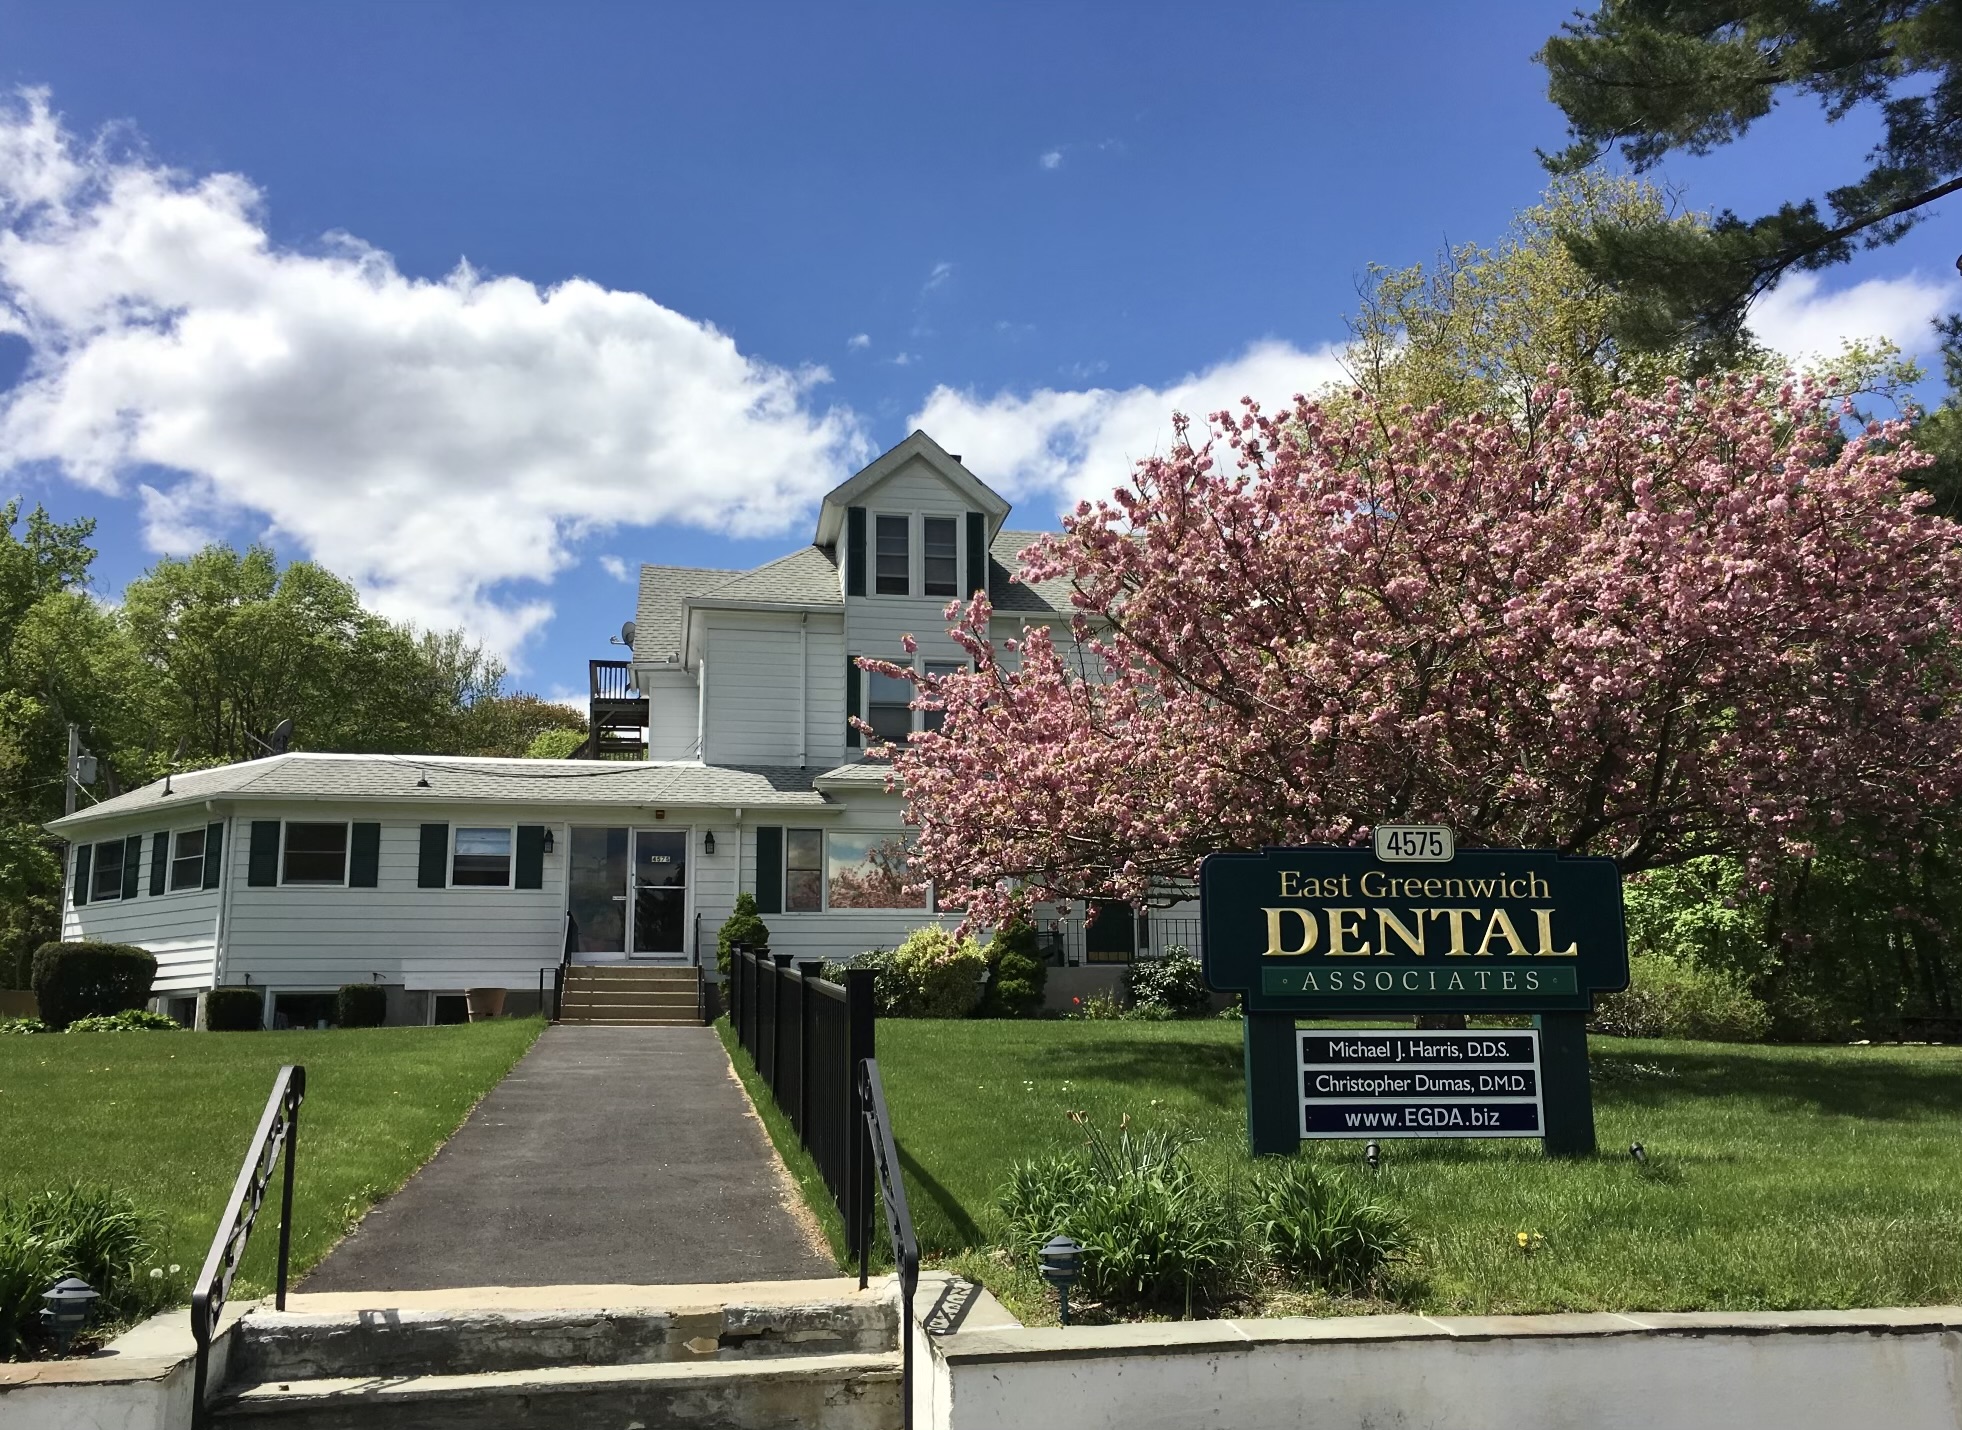 East Greenwich Dental Associates